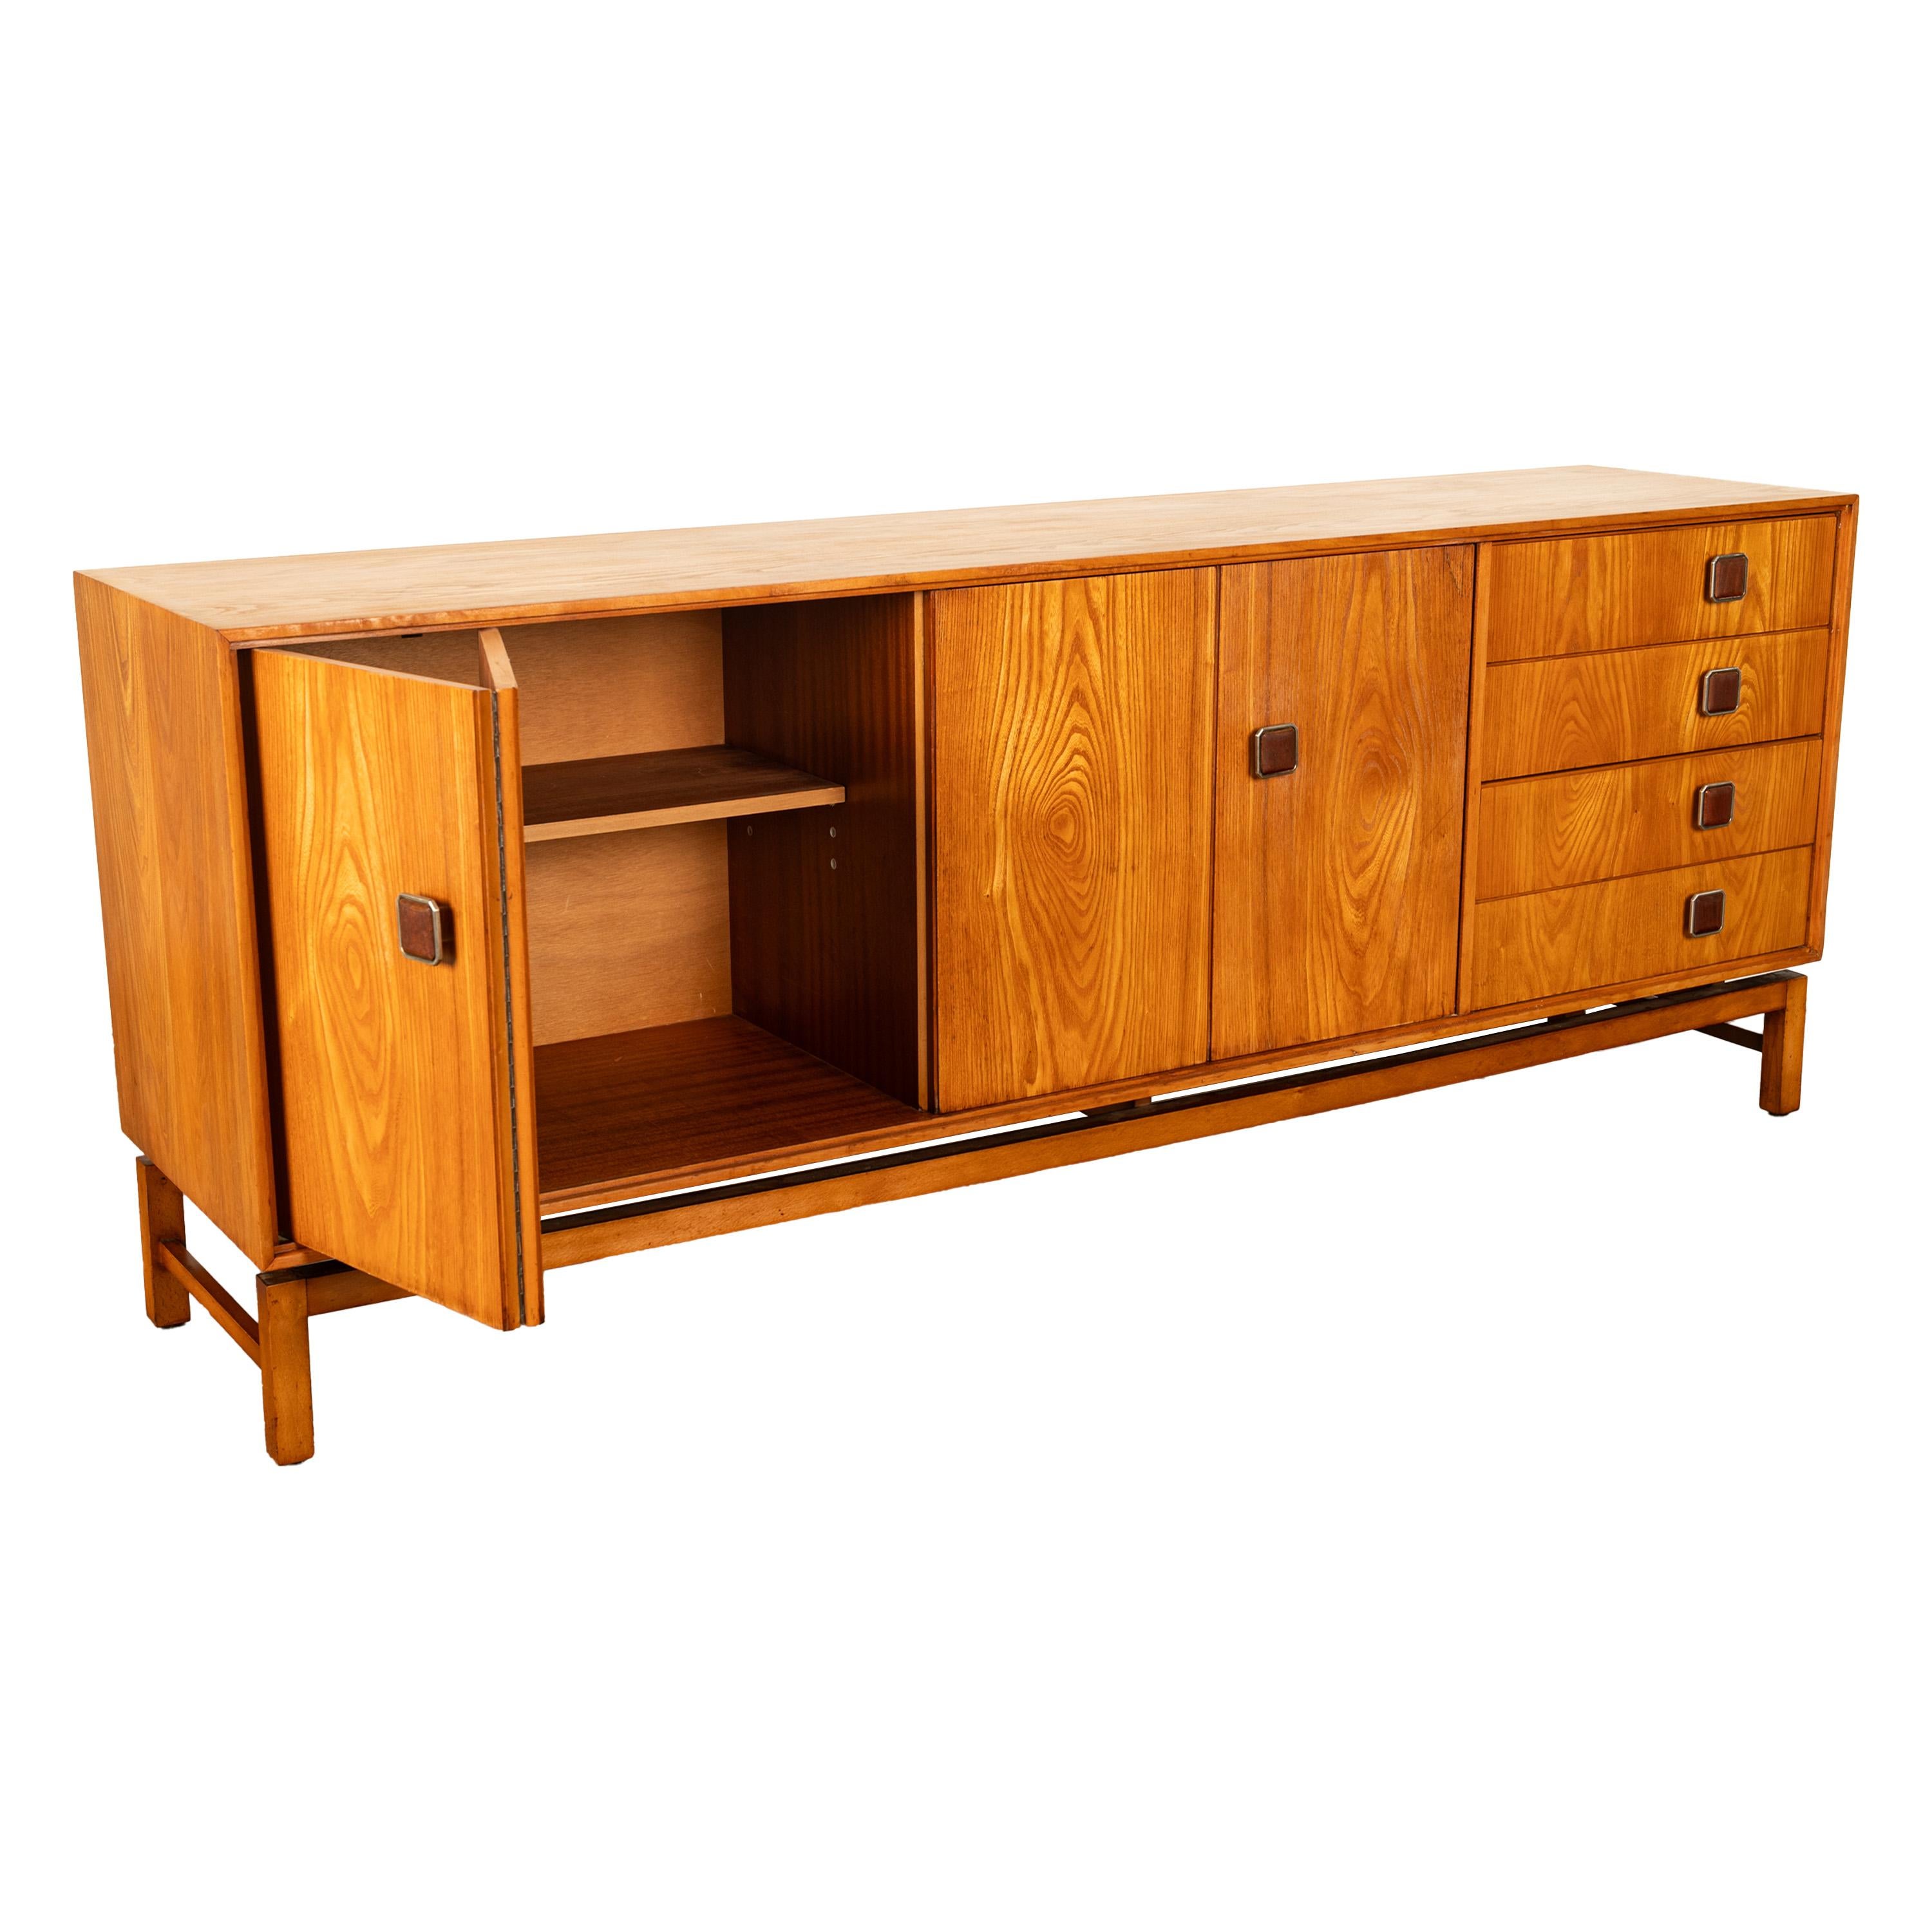 Original Danish Mid Century Modern Teak Credenza Sideboard Cabinet 6' Long 1960  2